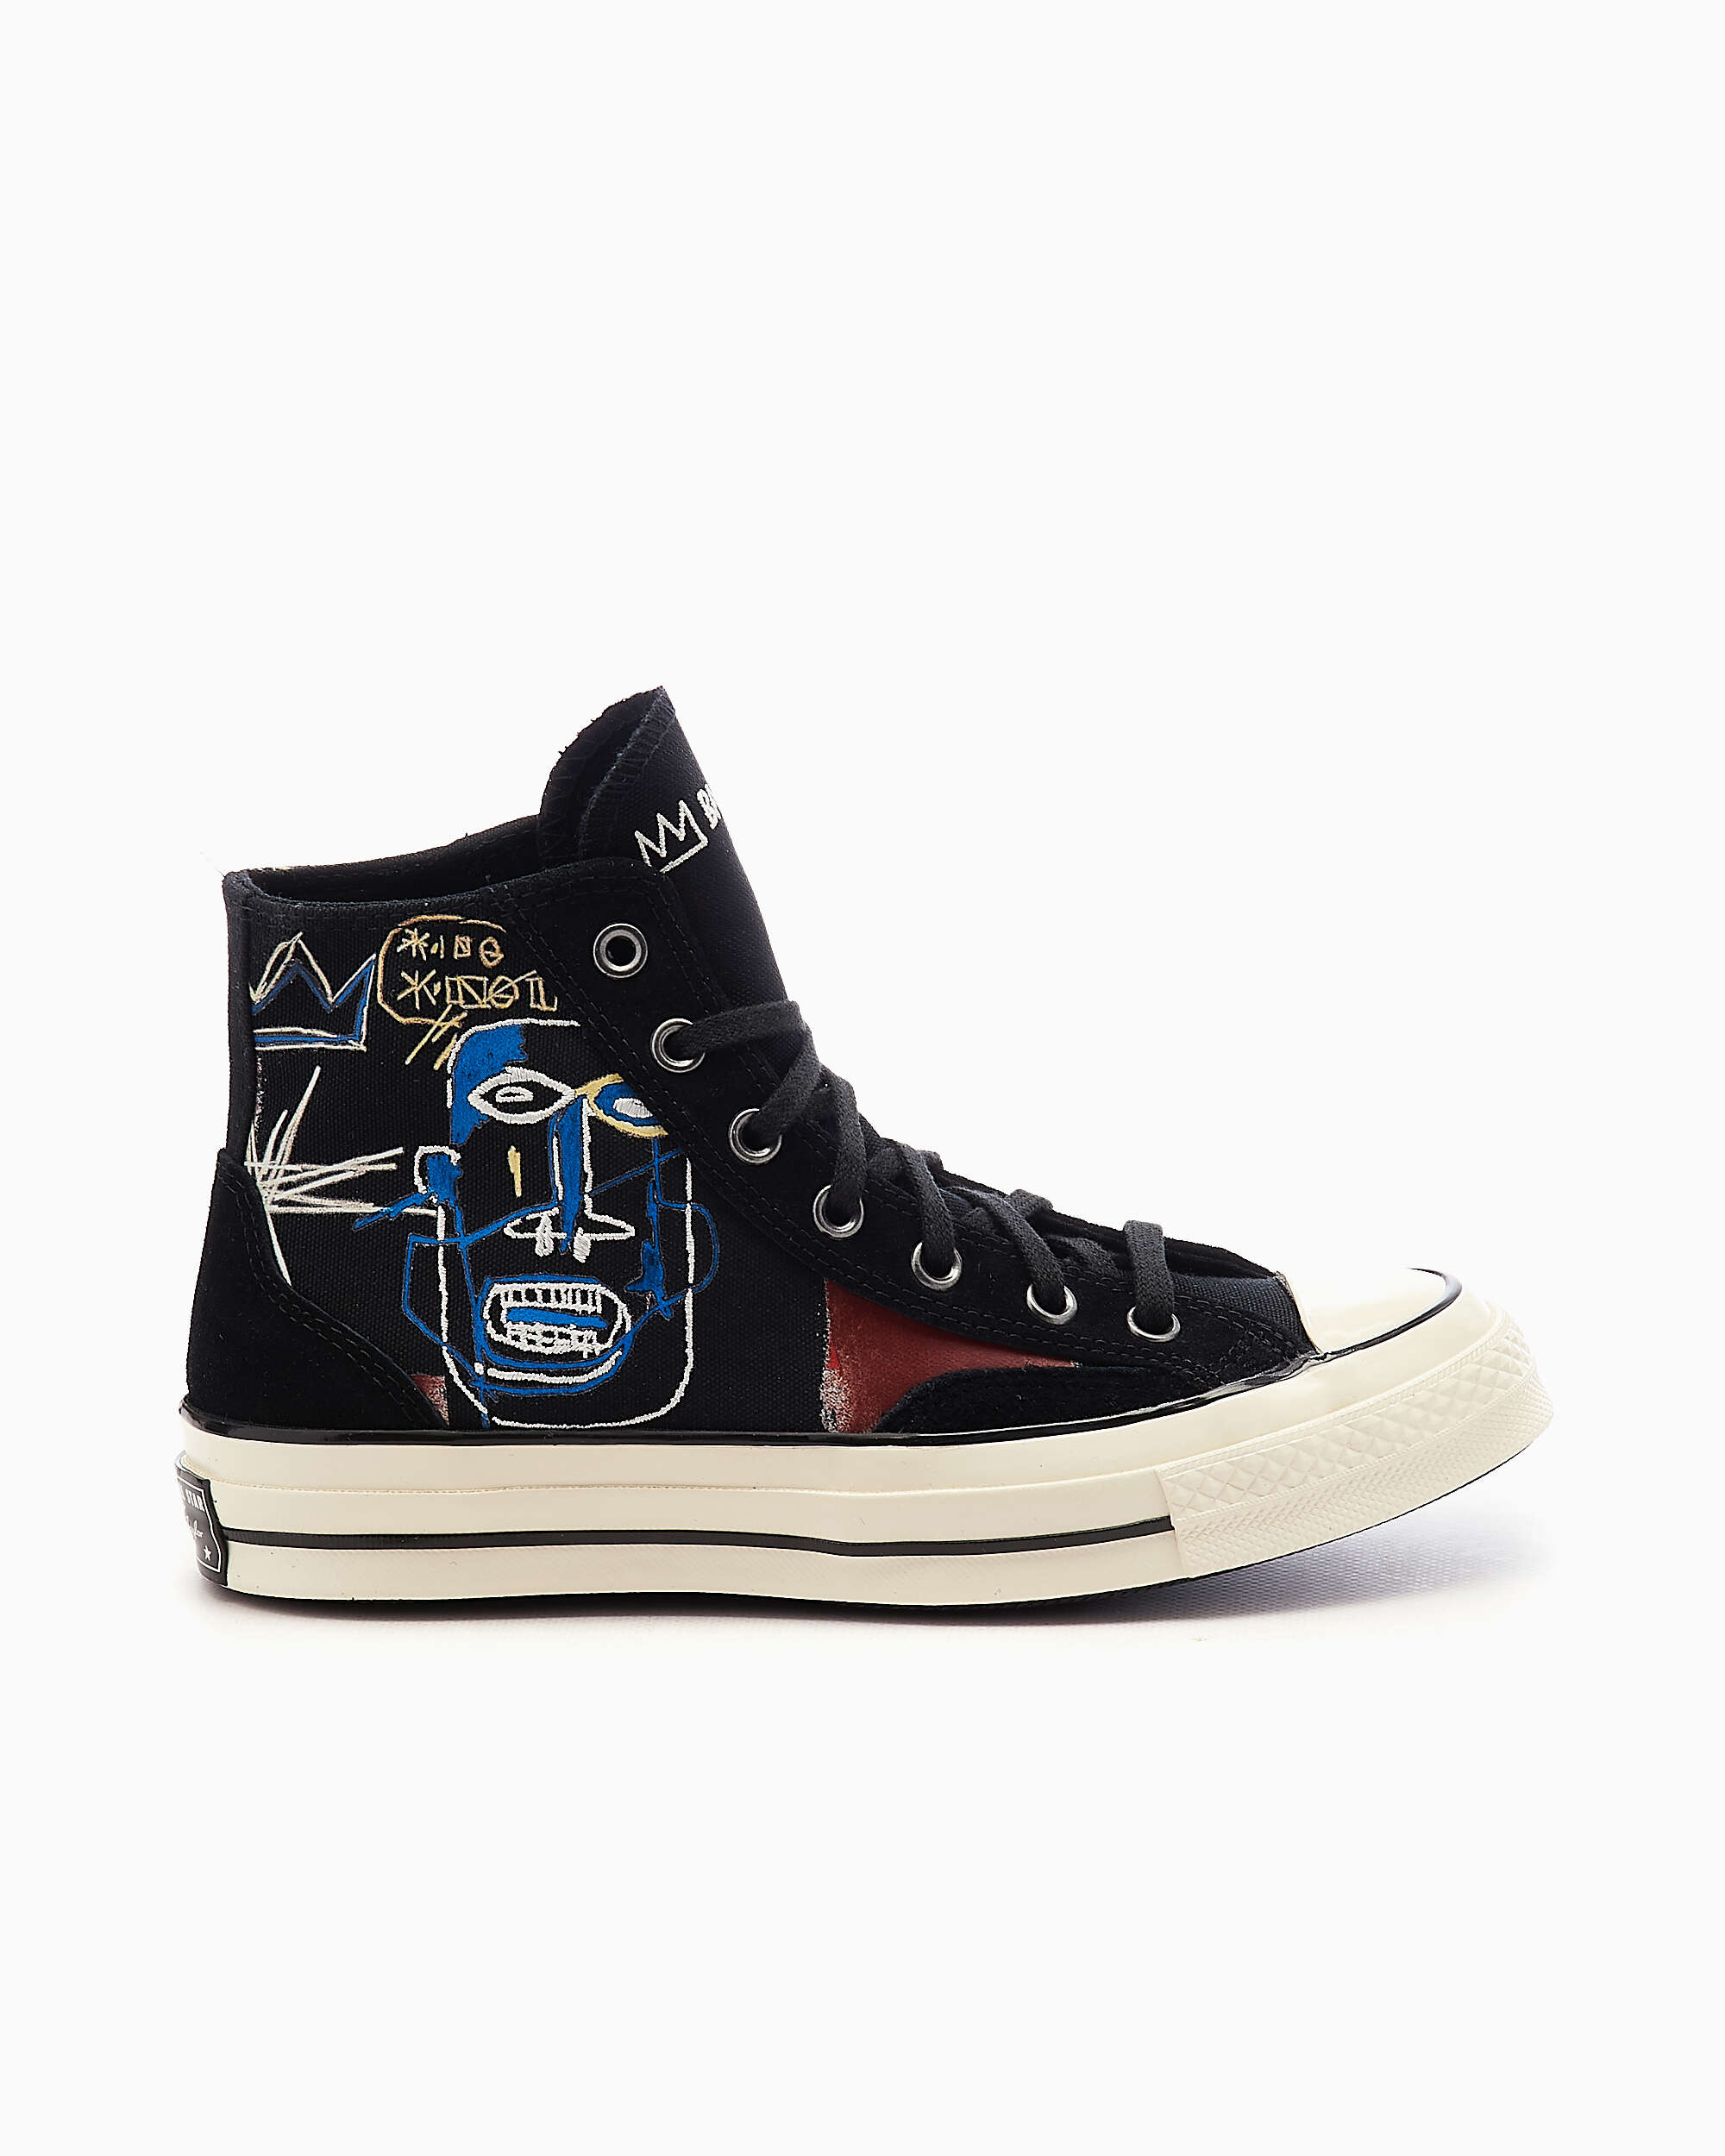 Converse x Basquiat Chuck 70 Hi Black 172585C| Buy Online at FOOTDISTRICT